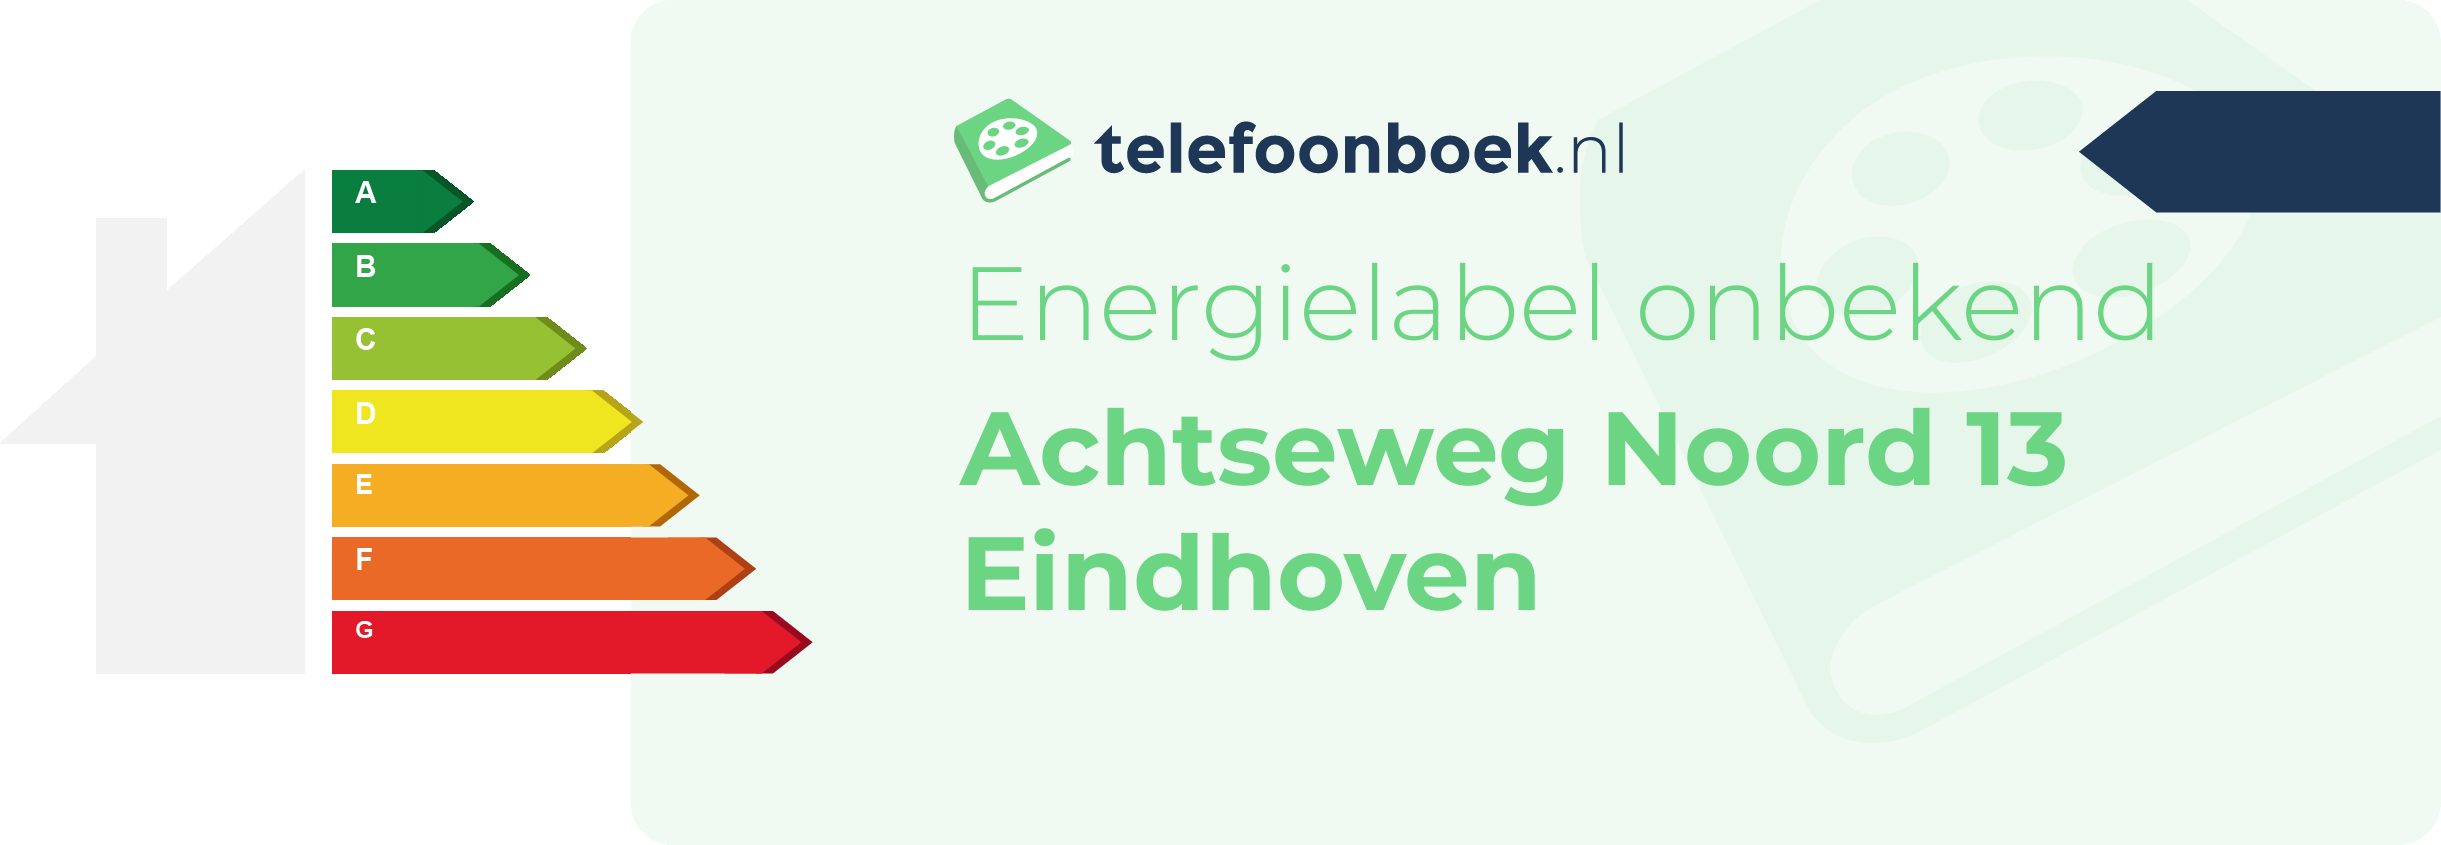 Energielabel Achtseweg Noord 13 Eindhoven